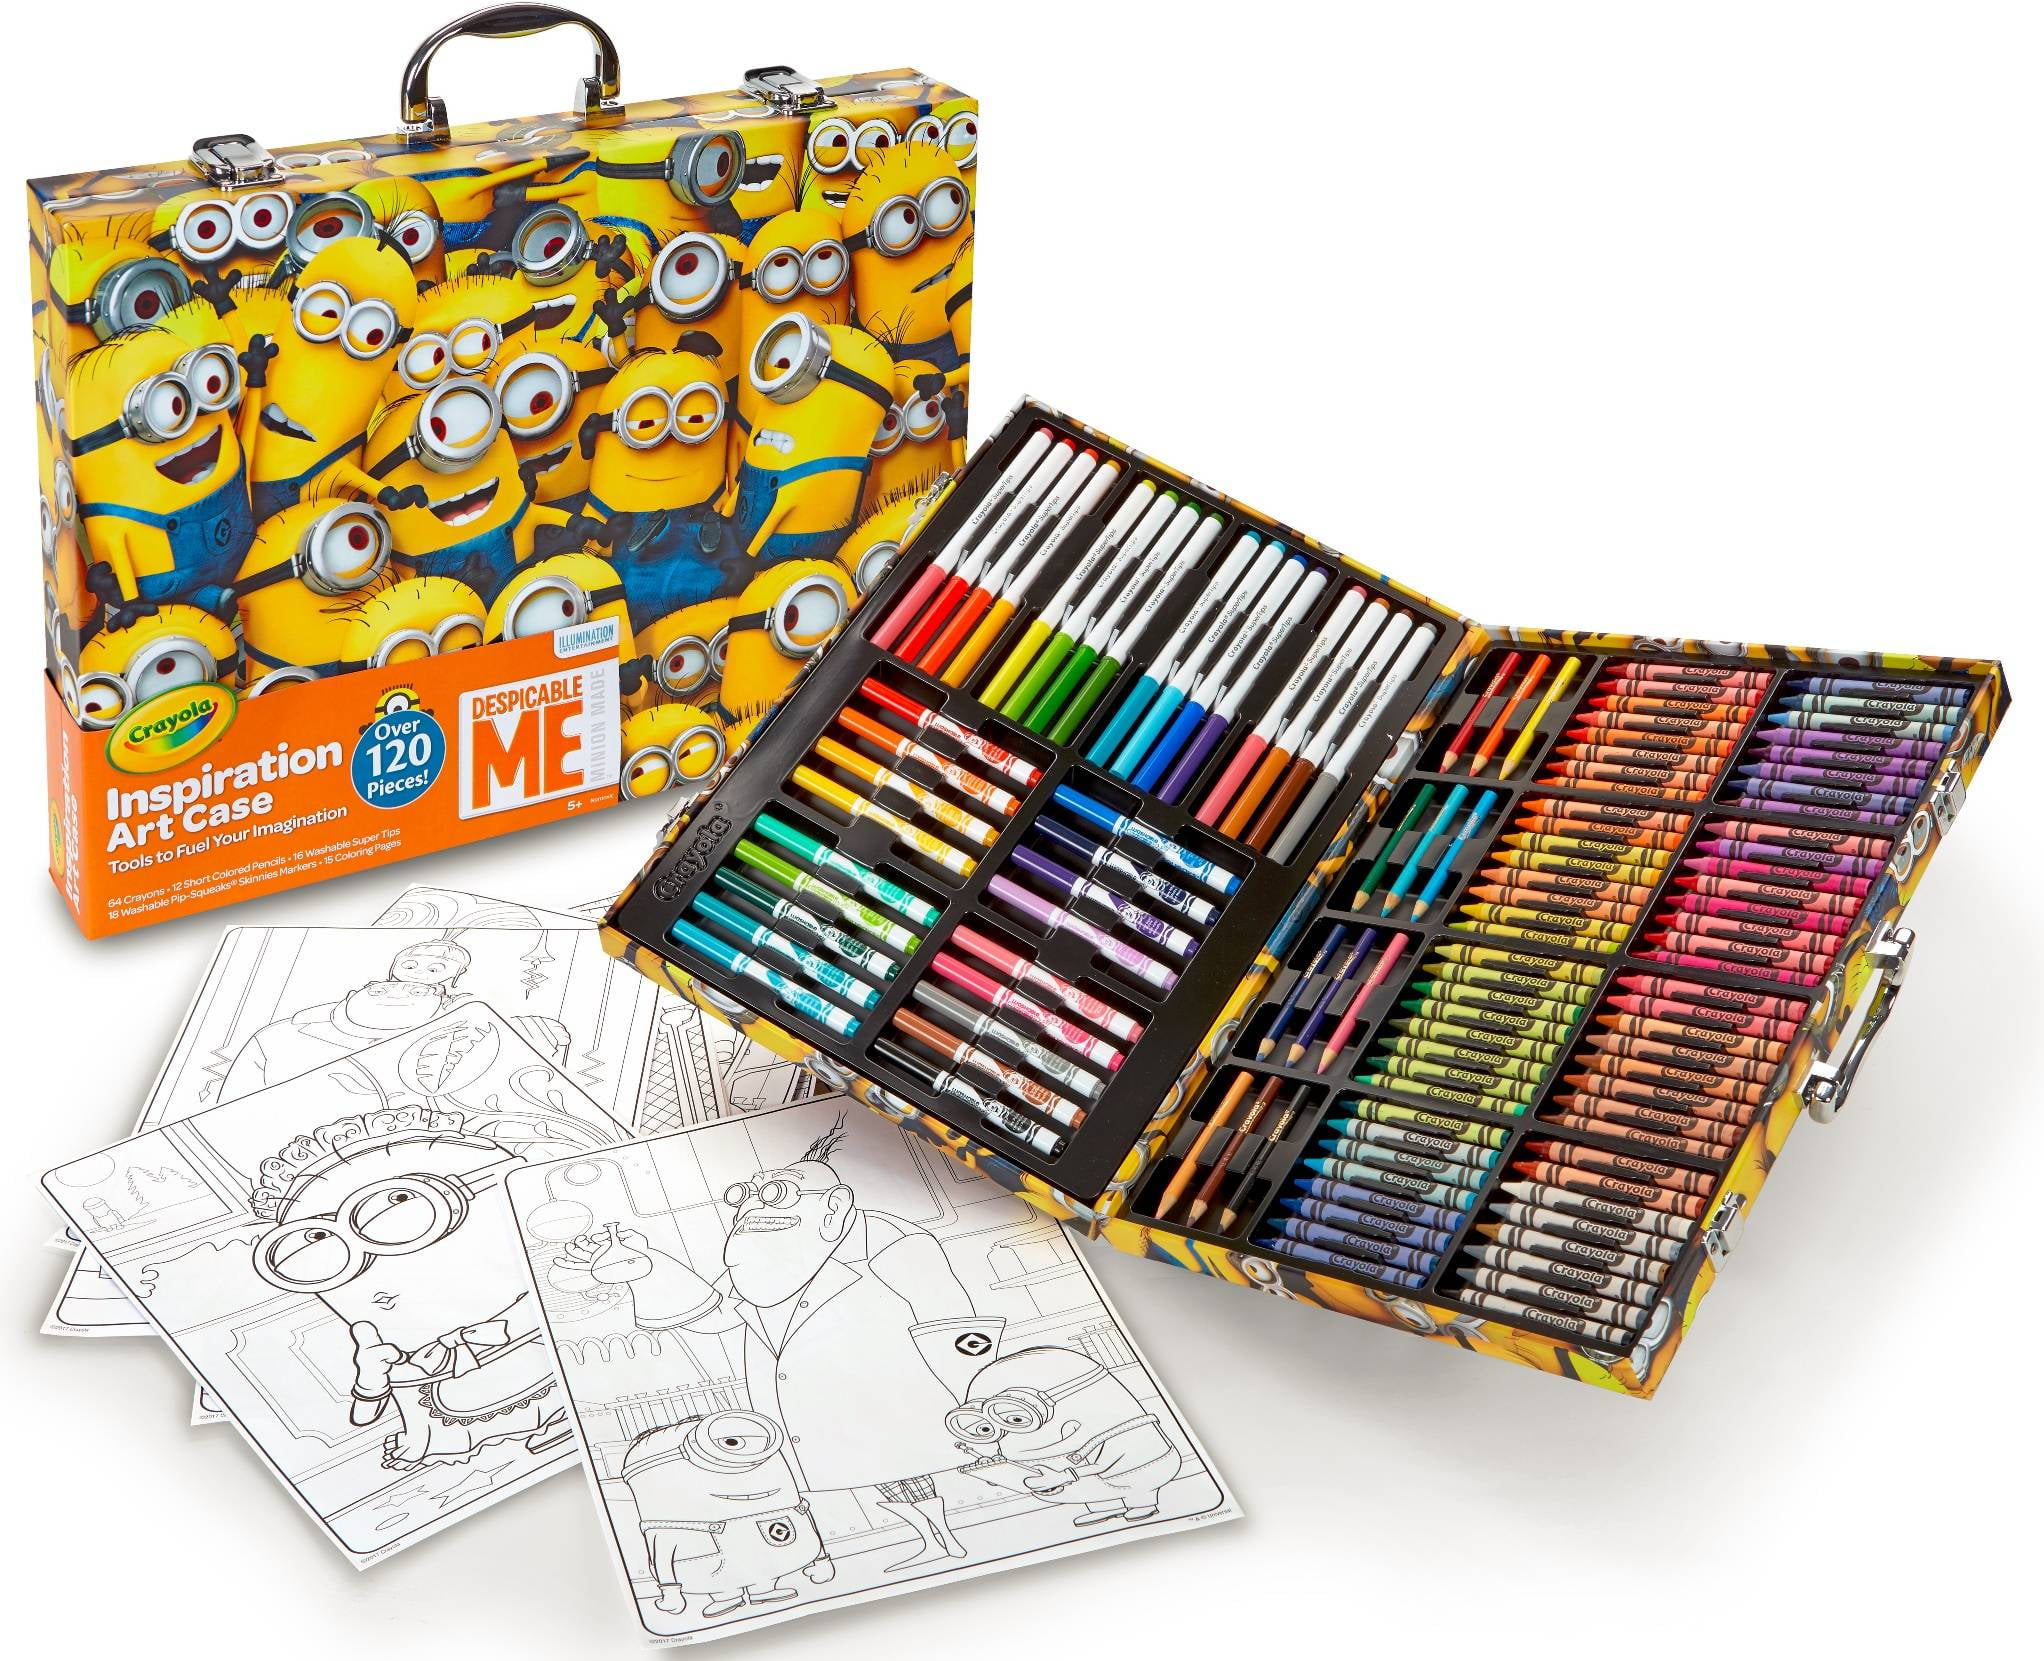 Amazing Crayola Creativity Kit! only $13 from Costco